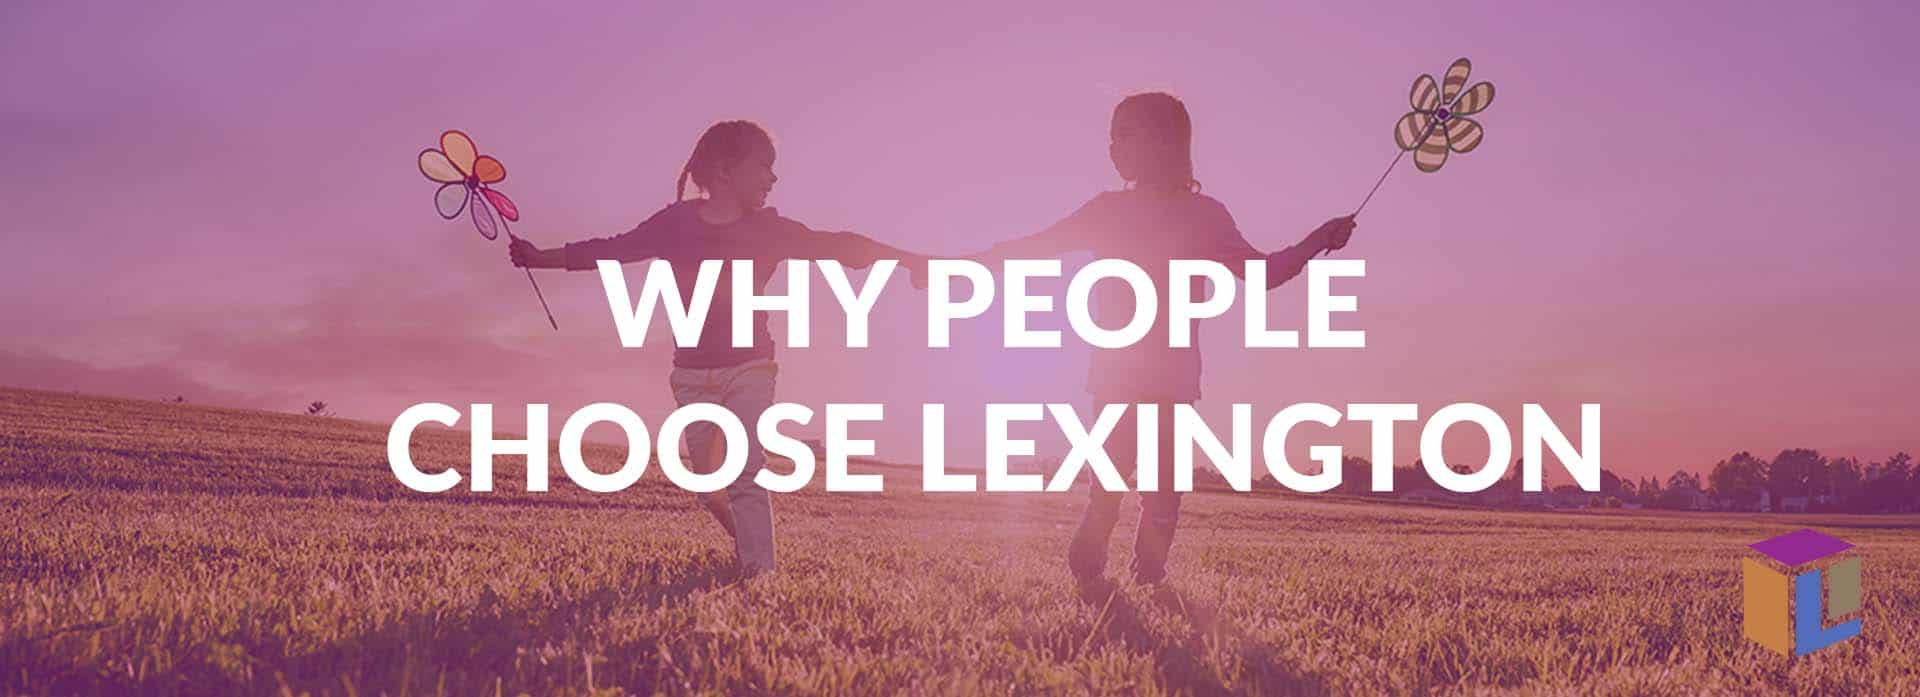 Why People Choose Lexington